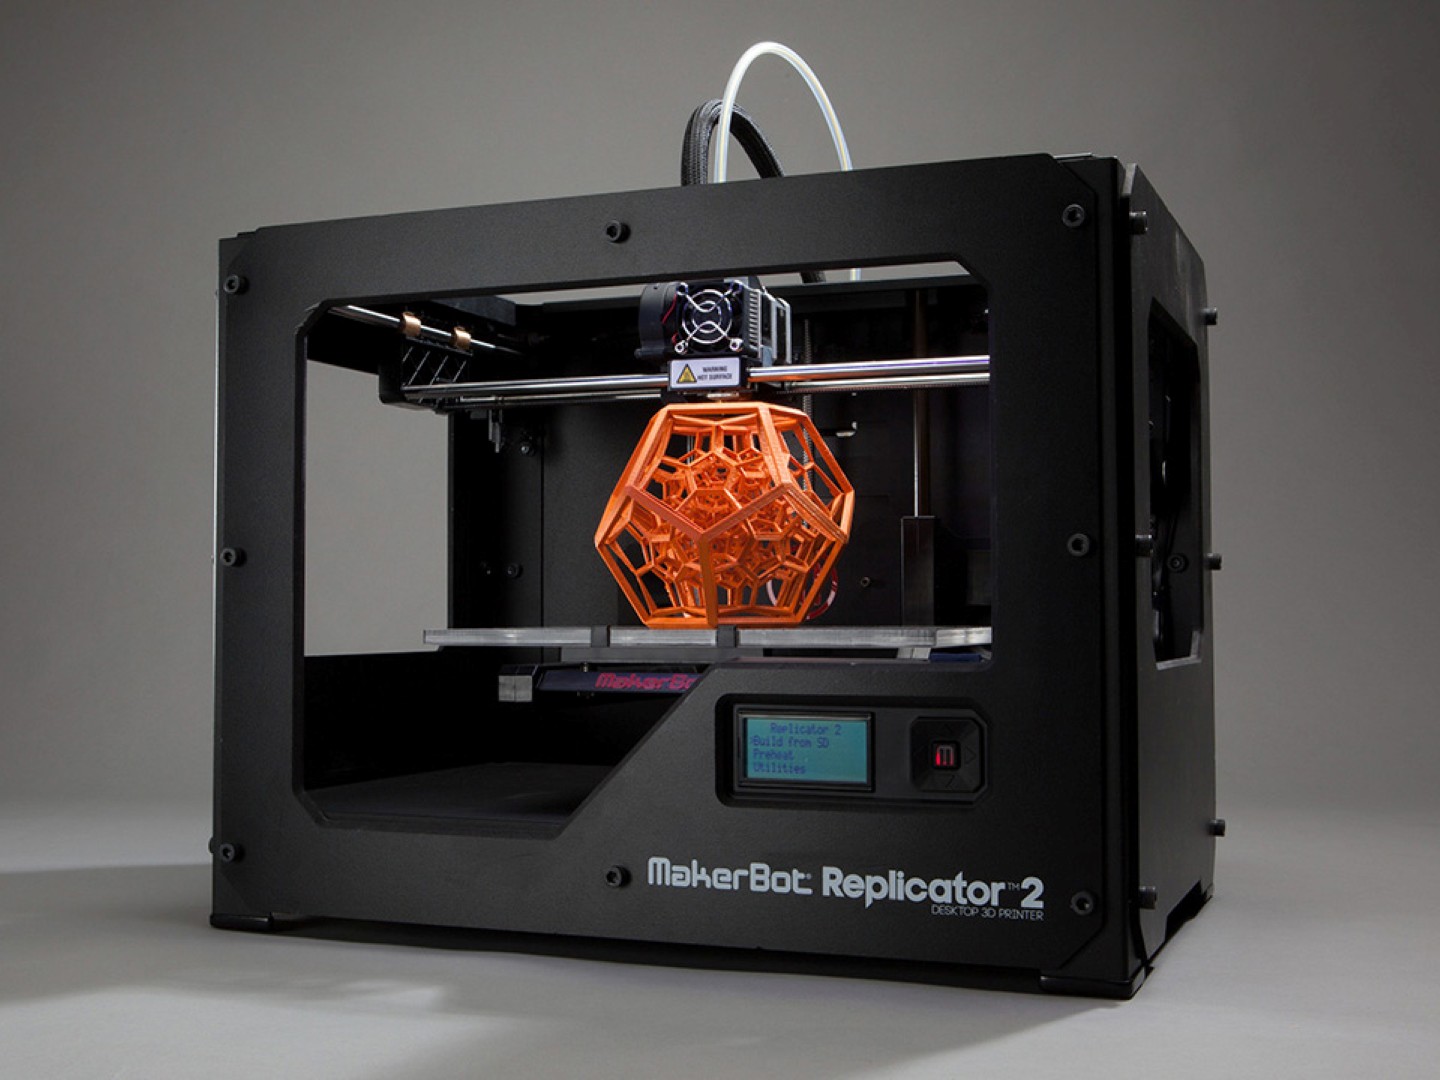 What is the Best Beginner 3D Printer to Buy - MakerBot Replicator 2